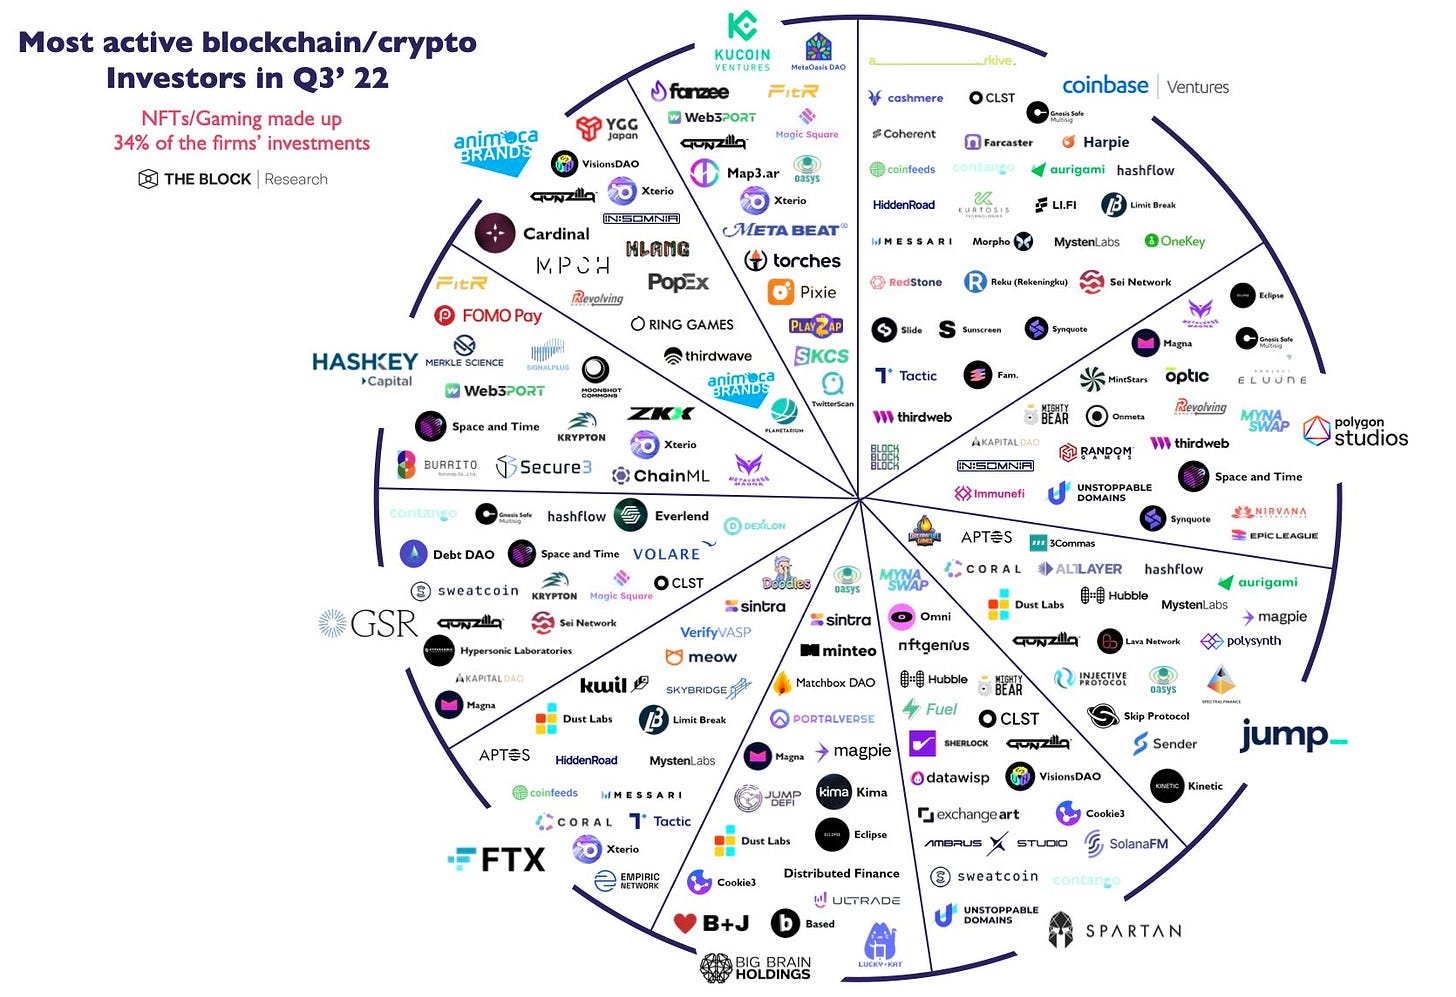 Most active blockchain / crypto investors in Q3 2022.